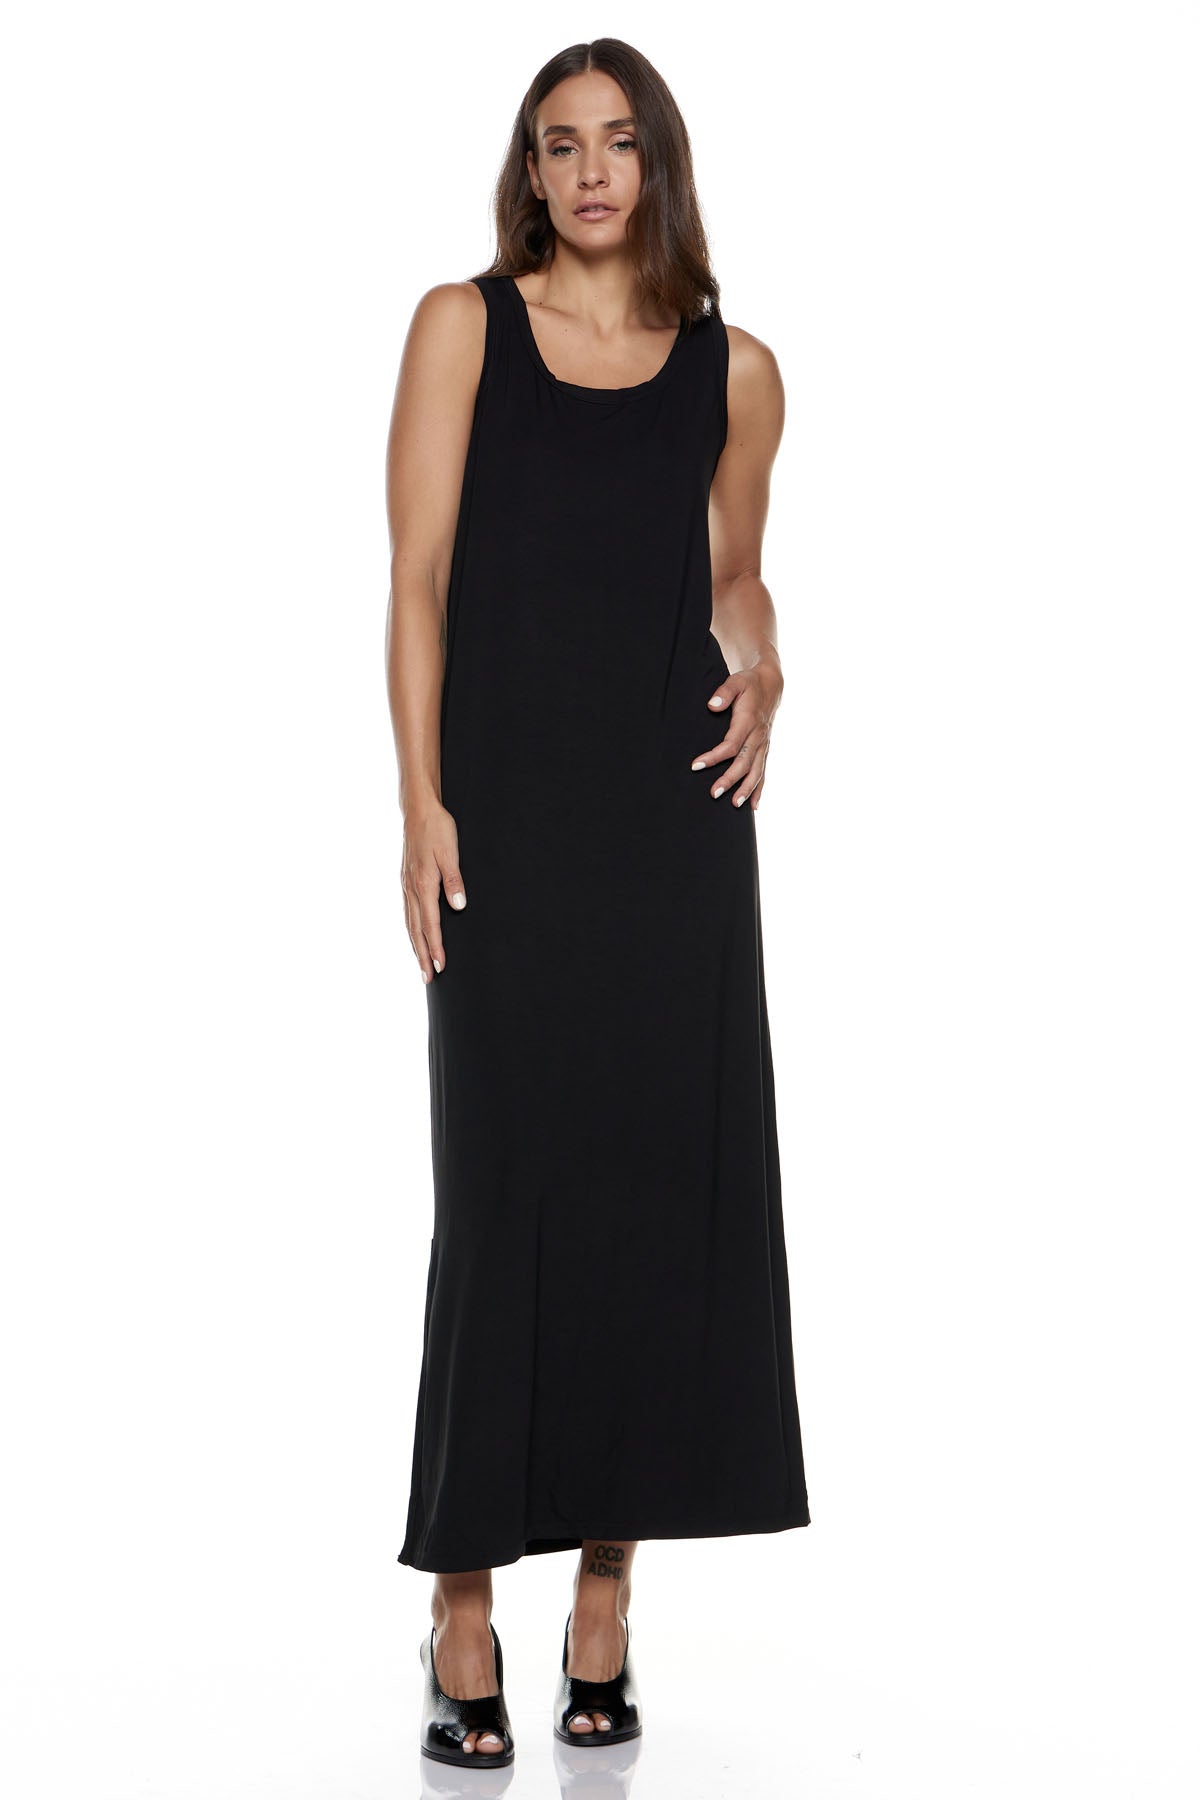 Chic & Simple Dress (Basics) Fationa - Black